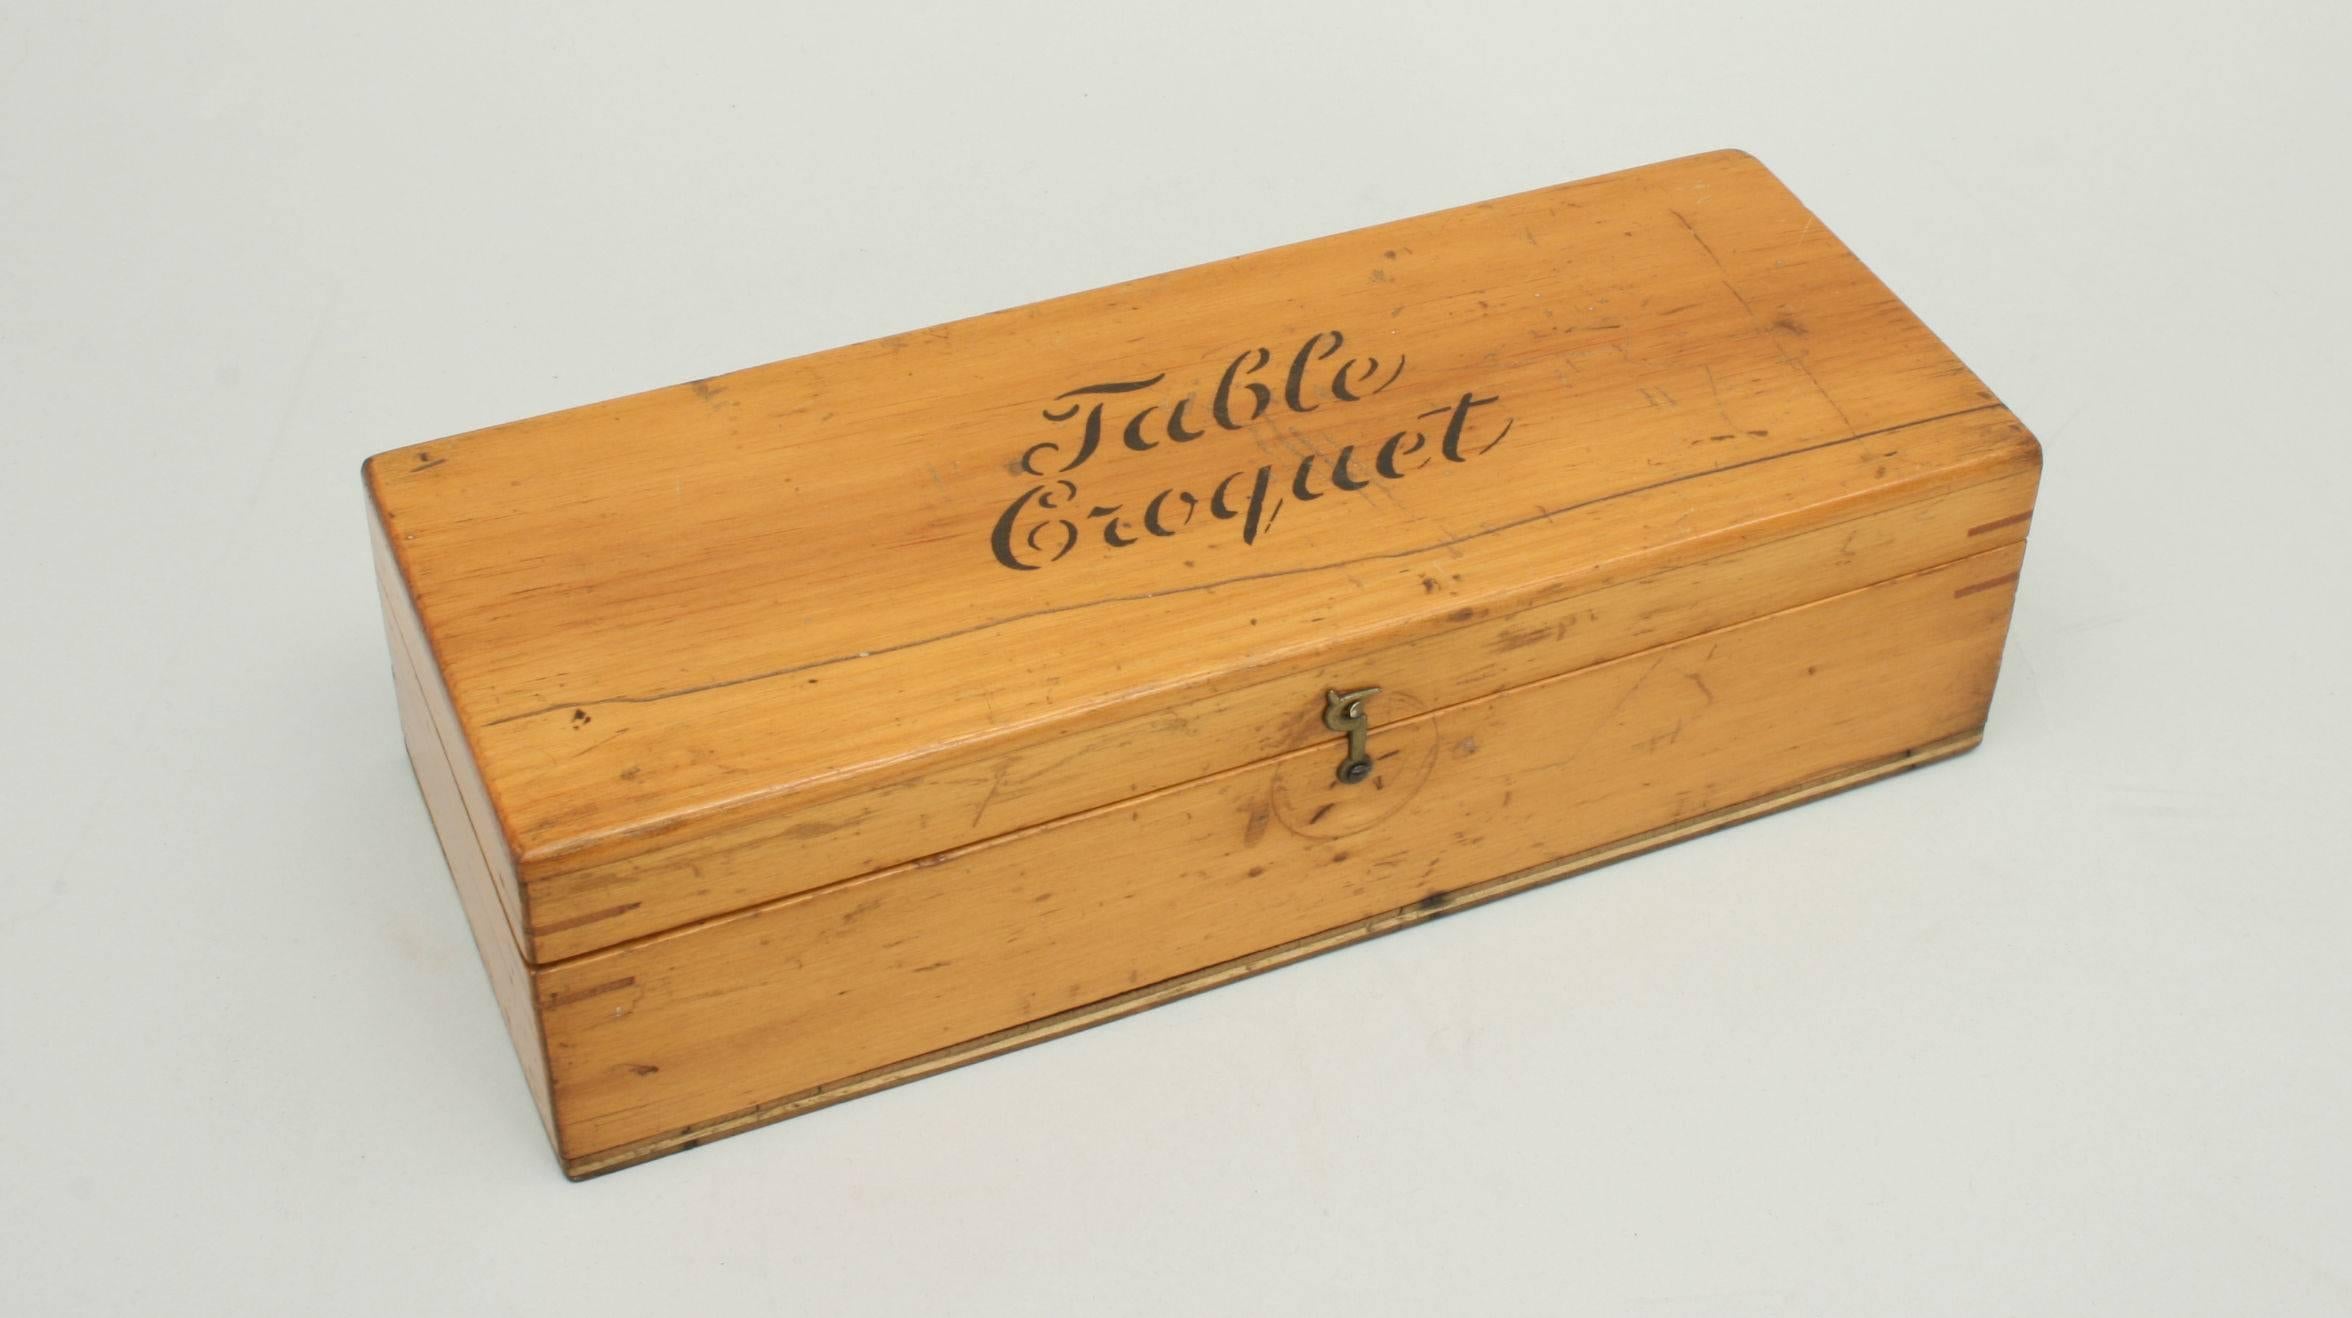 British Table Croquet Set in Pine Box